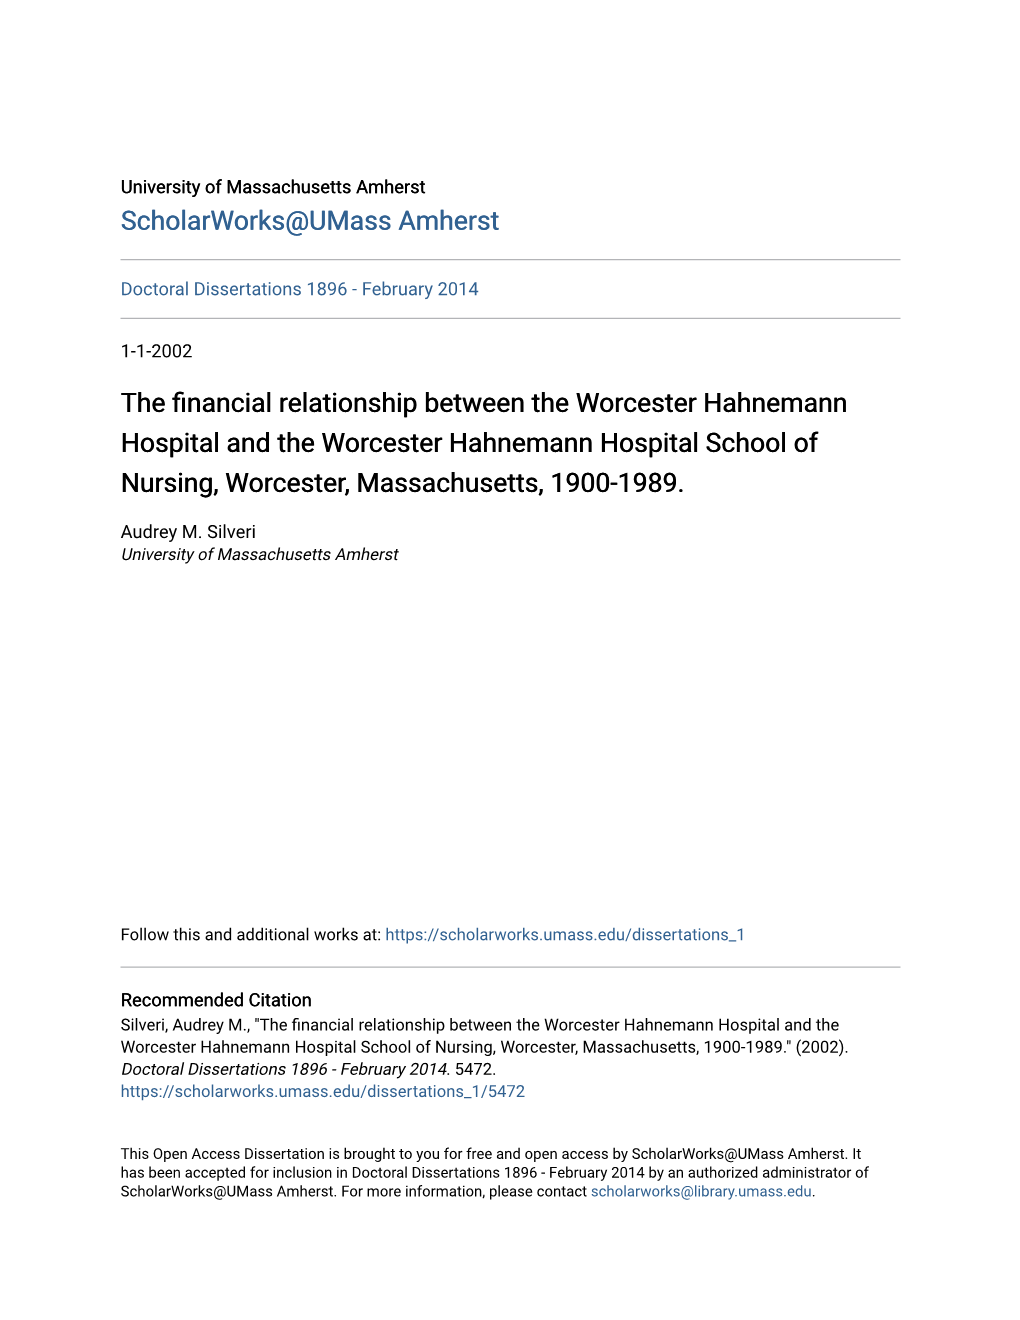 The Financial Relationship Between the Worcester Hahnemann Hospital and the Worcester Hahnemann Hospital School of Nursing, Worcester Massachusetts 1900-1989